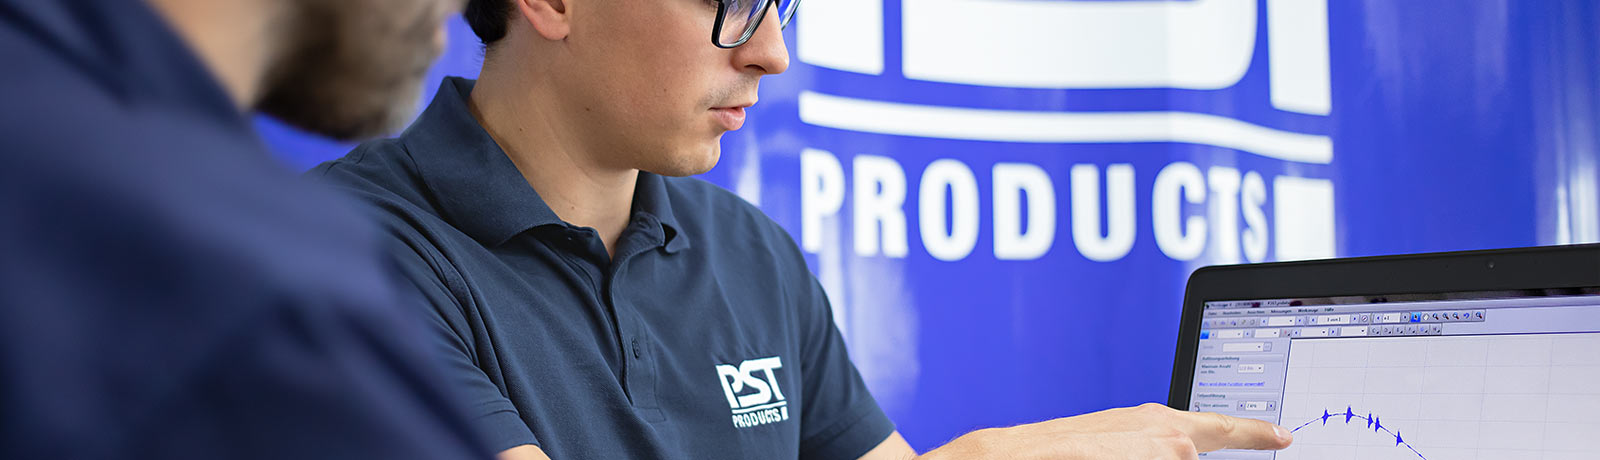 PSTproducts GmbH